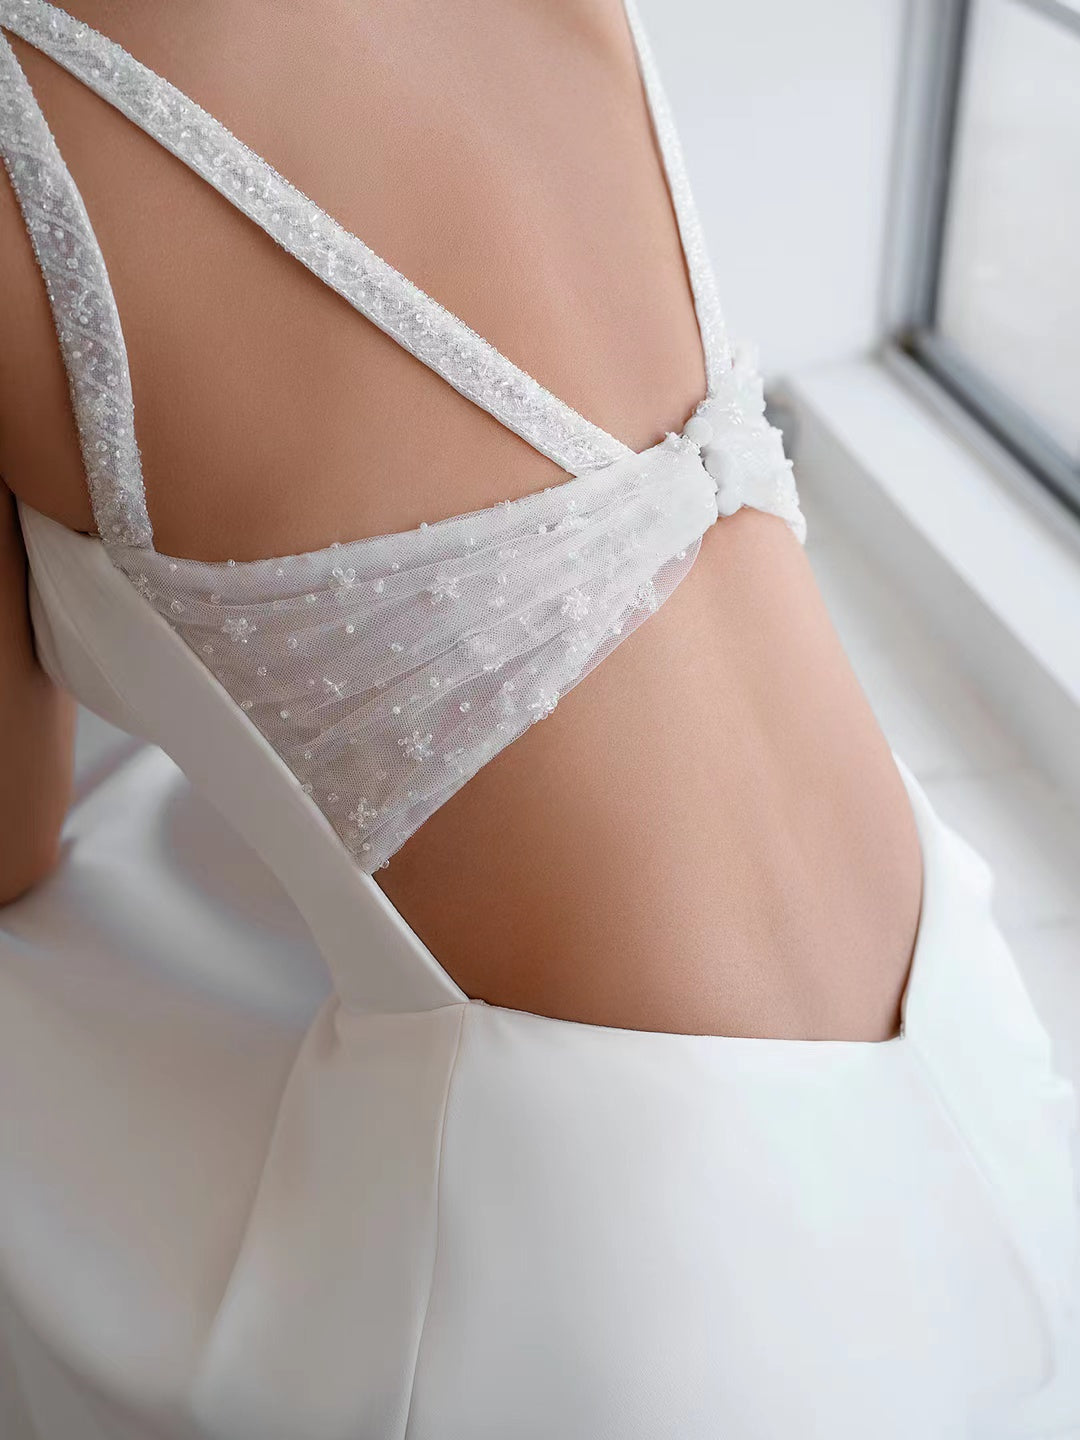 Newest 2022 Simple Wedding Dresses, A-line Fashion Bridal Gowns, High Quality Wedding Gowns